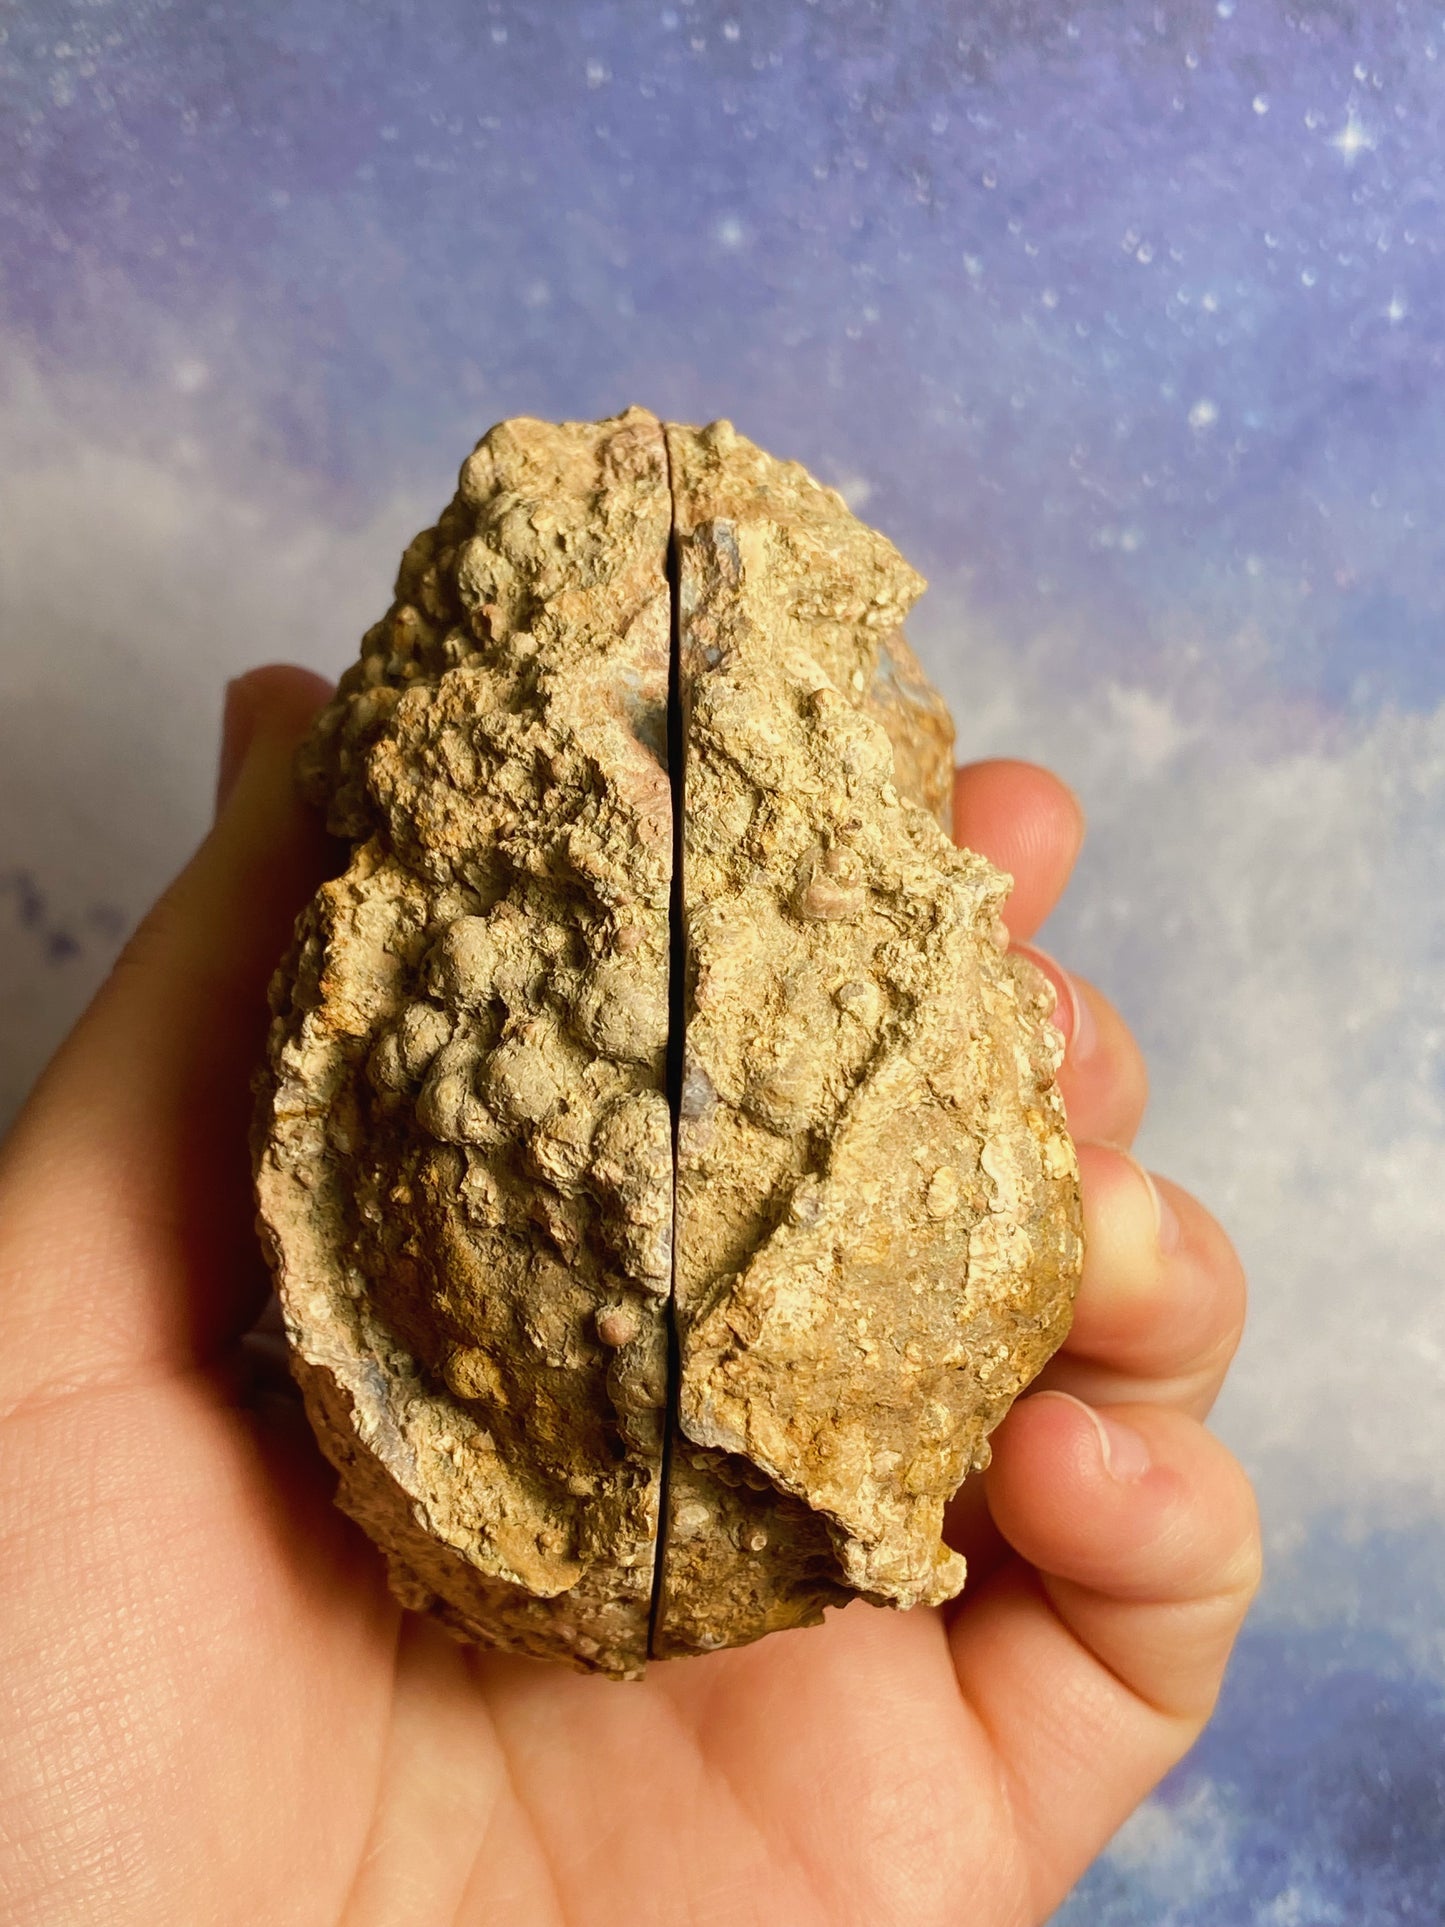 Druzy Agate Geode with Quartz